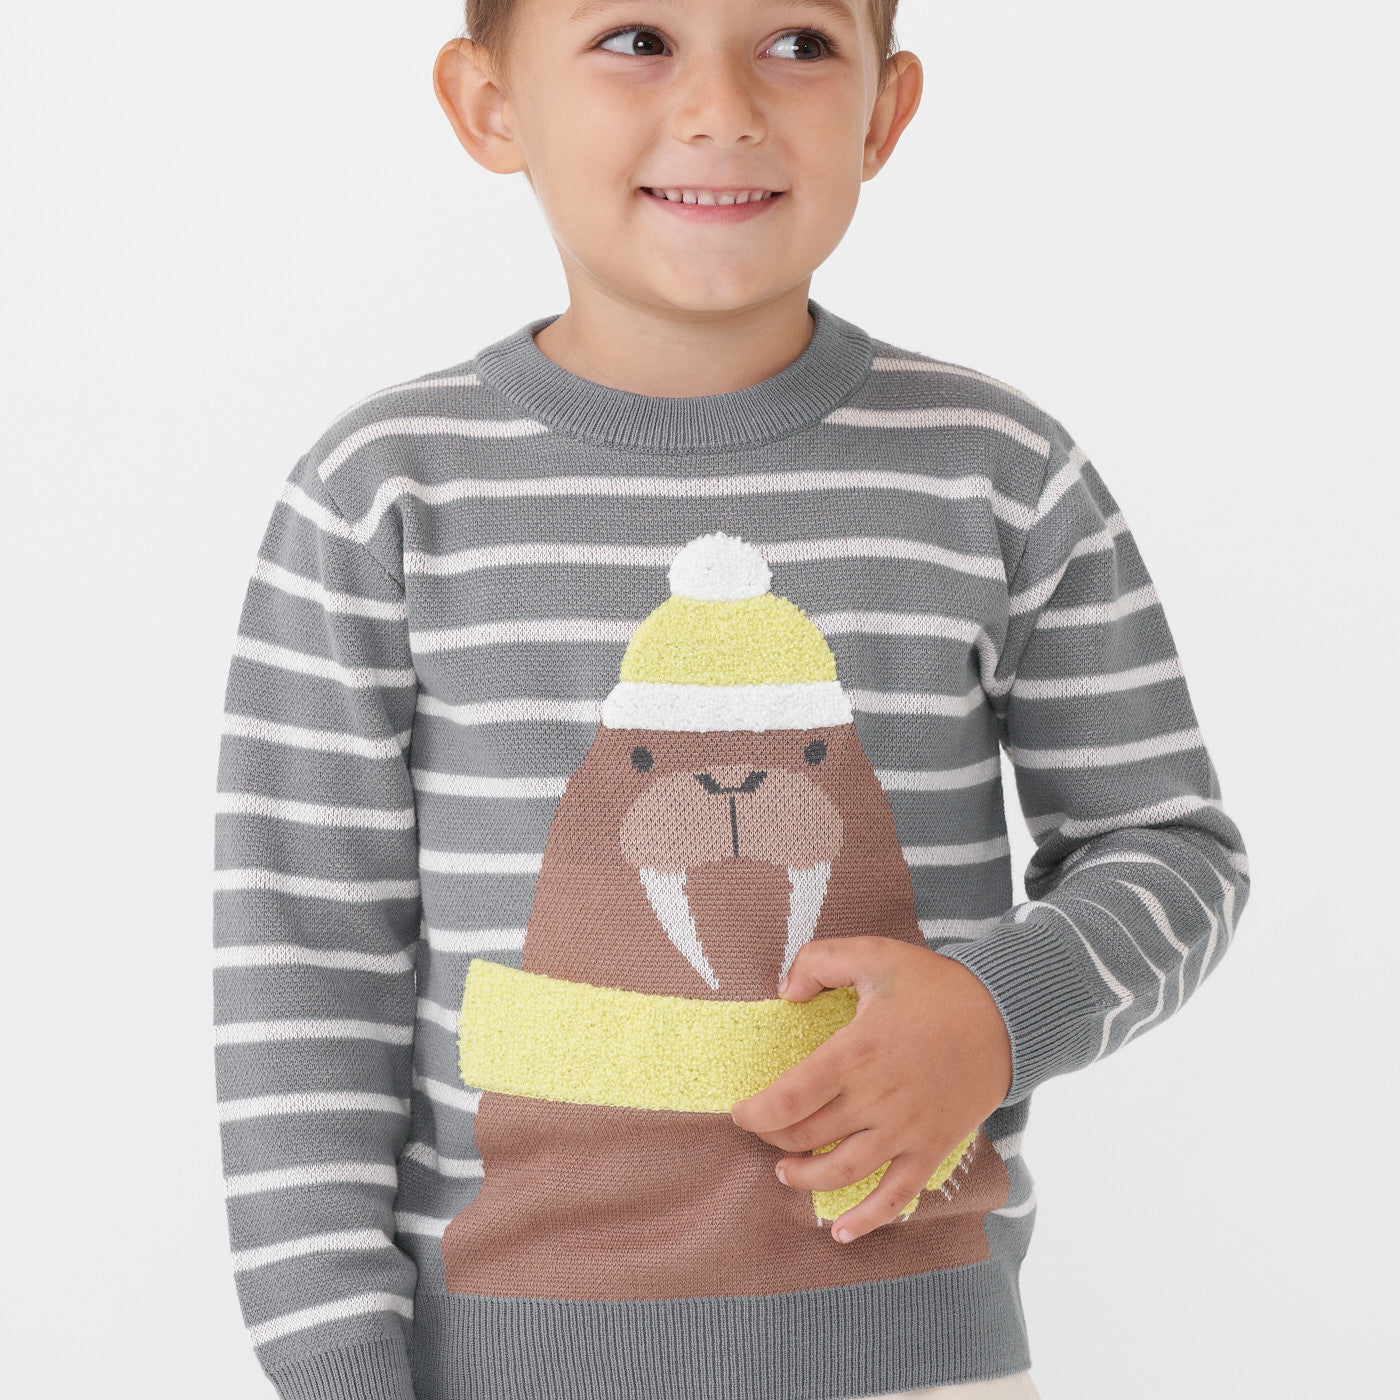 Alternate close up image of a child wearing a Walrus knit sweater